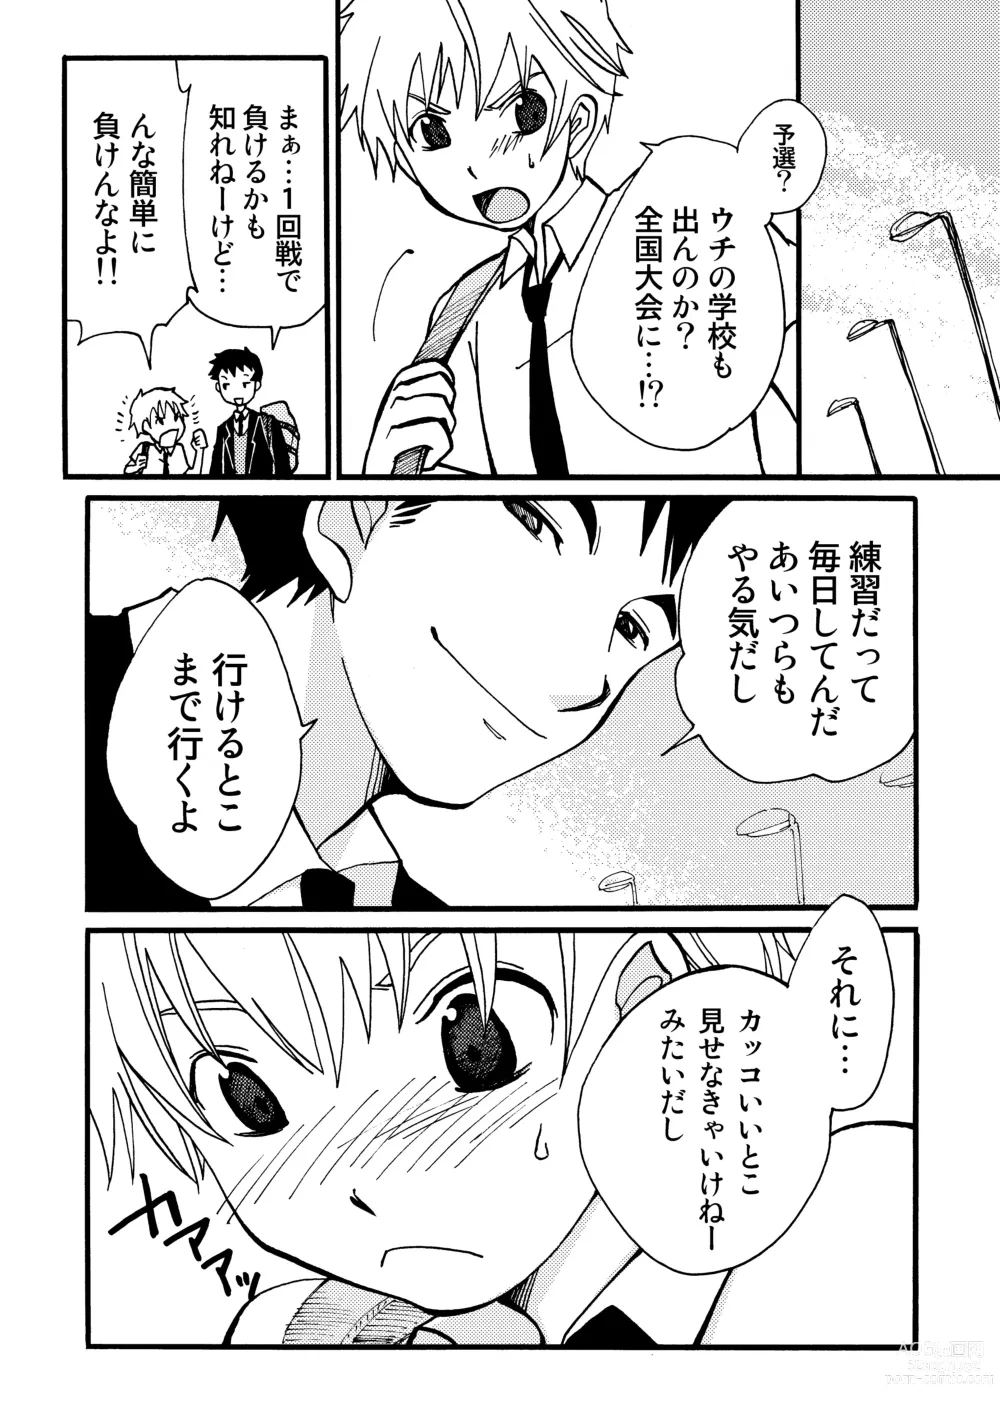 Page 20 of doujinshi Suki!